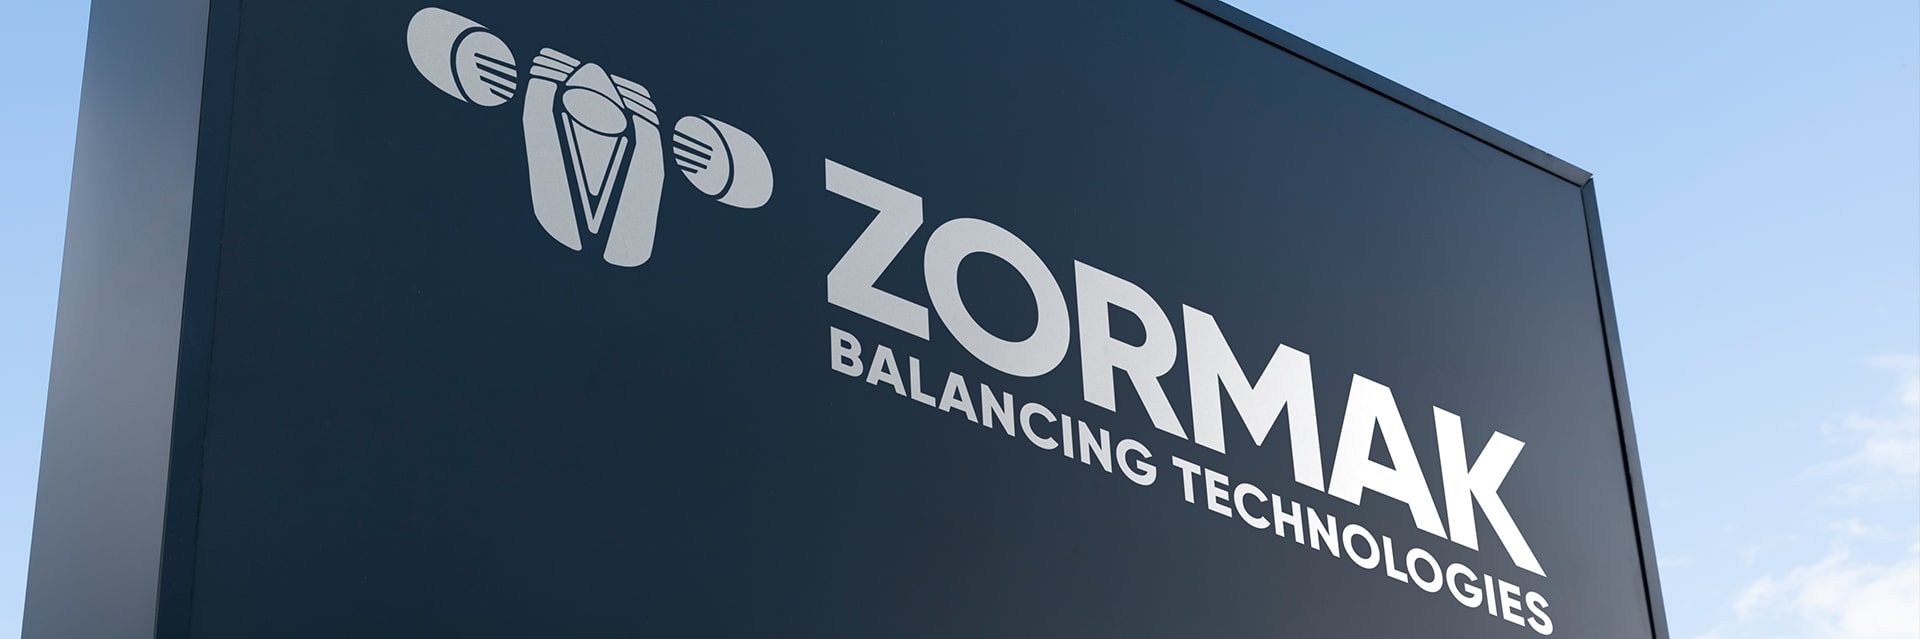 Zormak Balancing Technologies